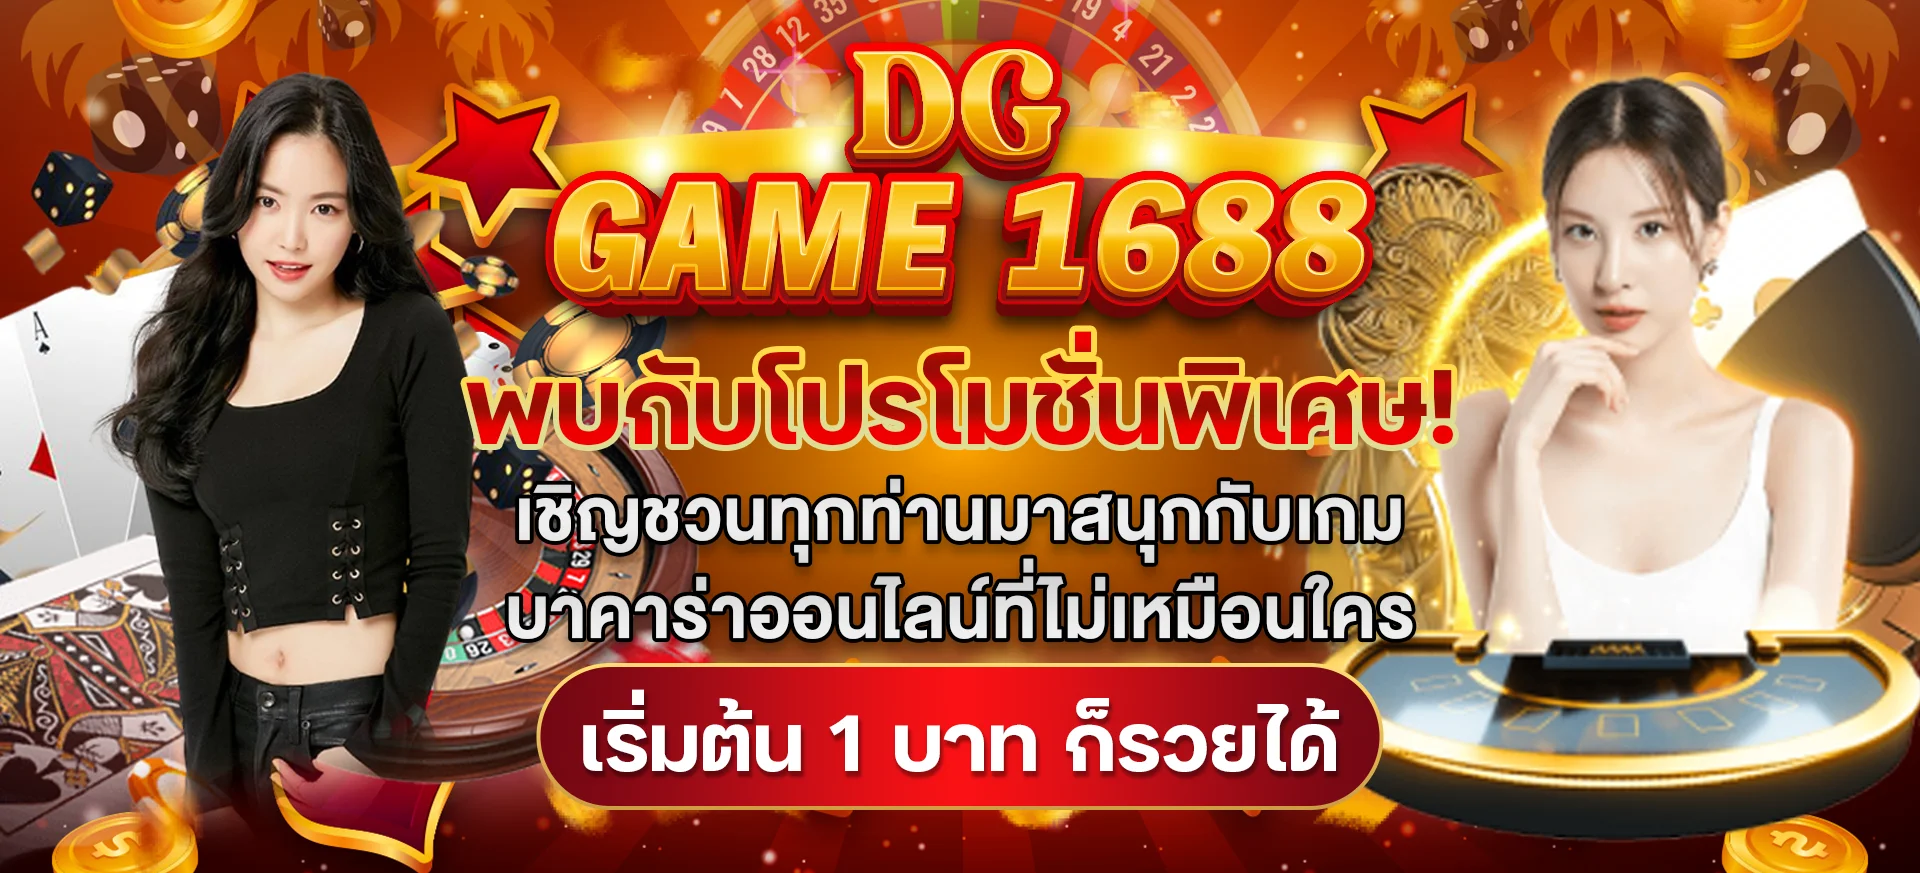 DG GAME 1688